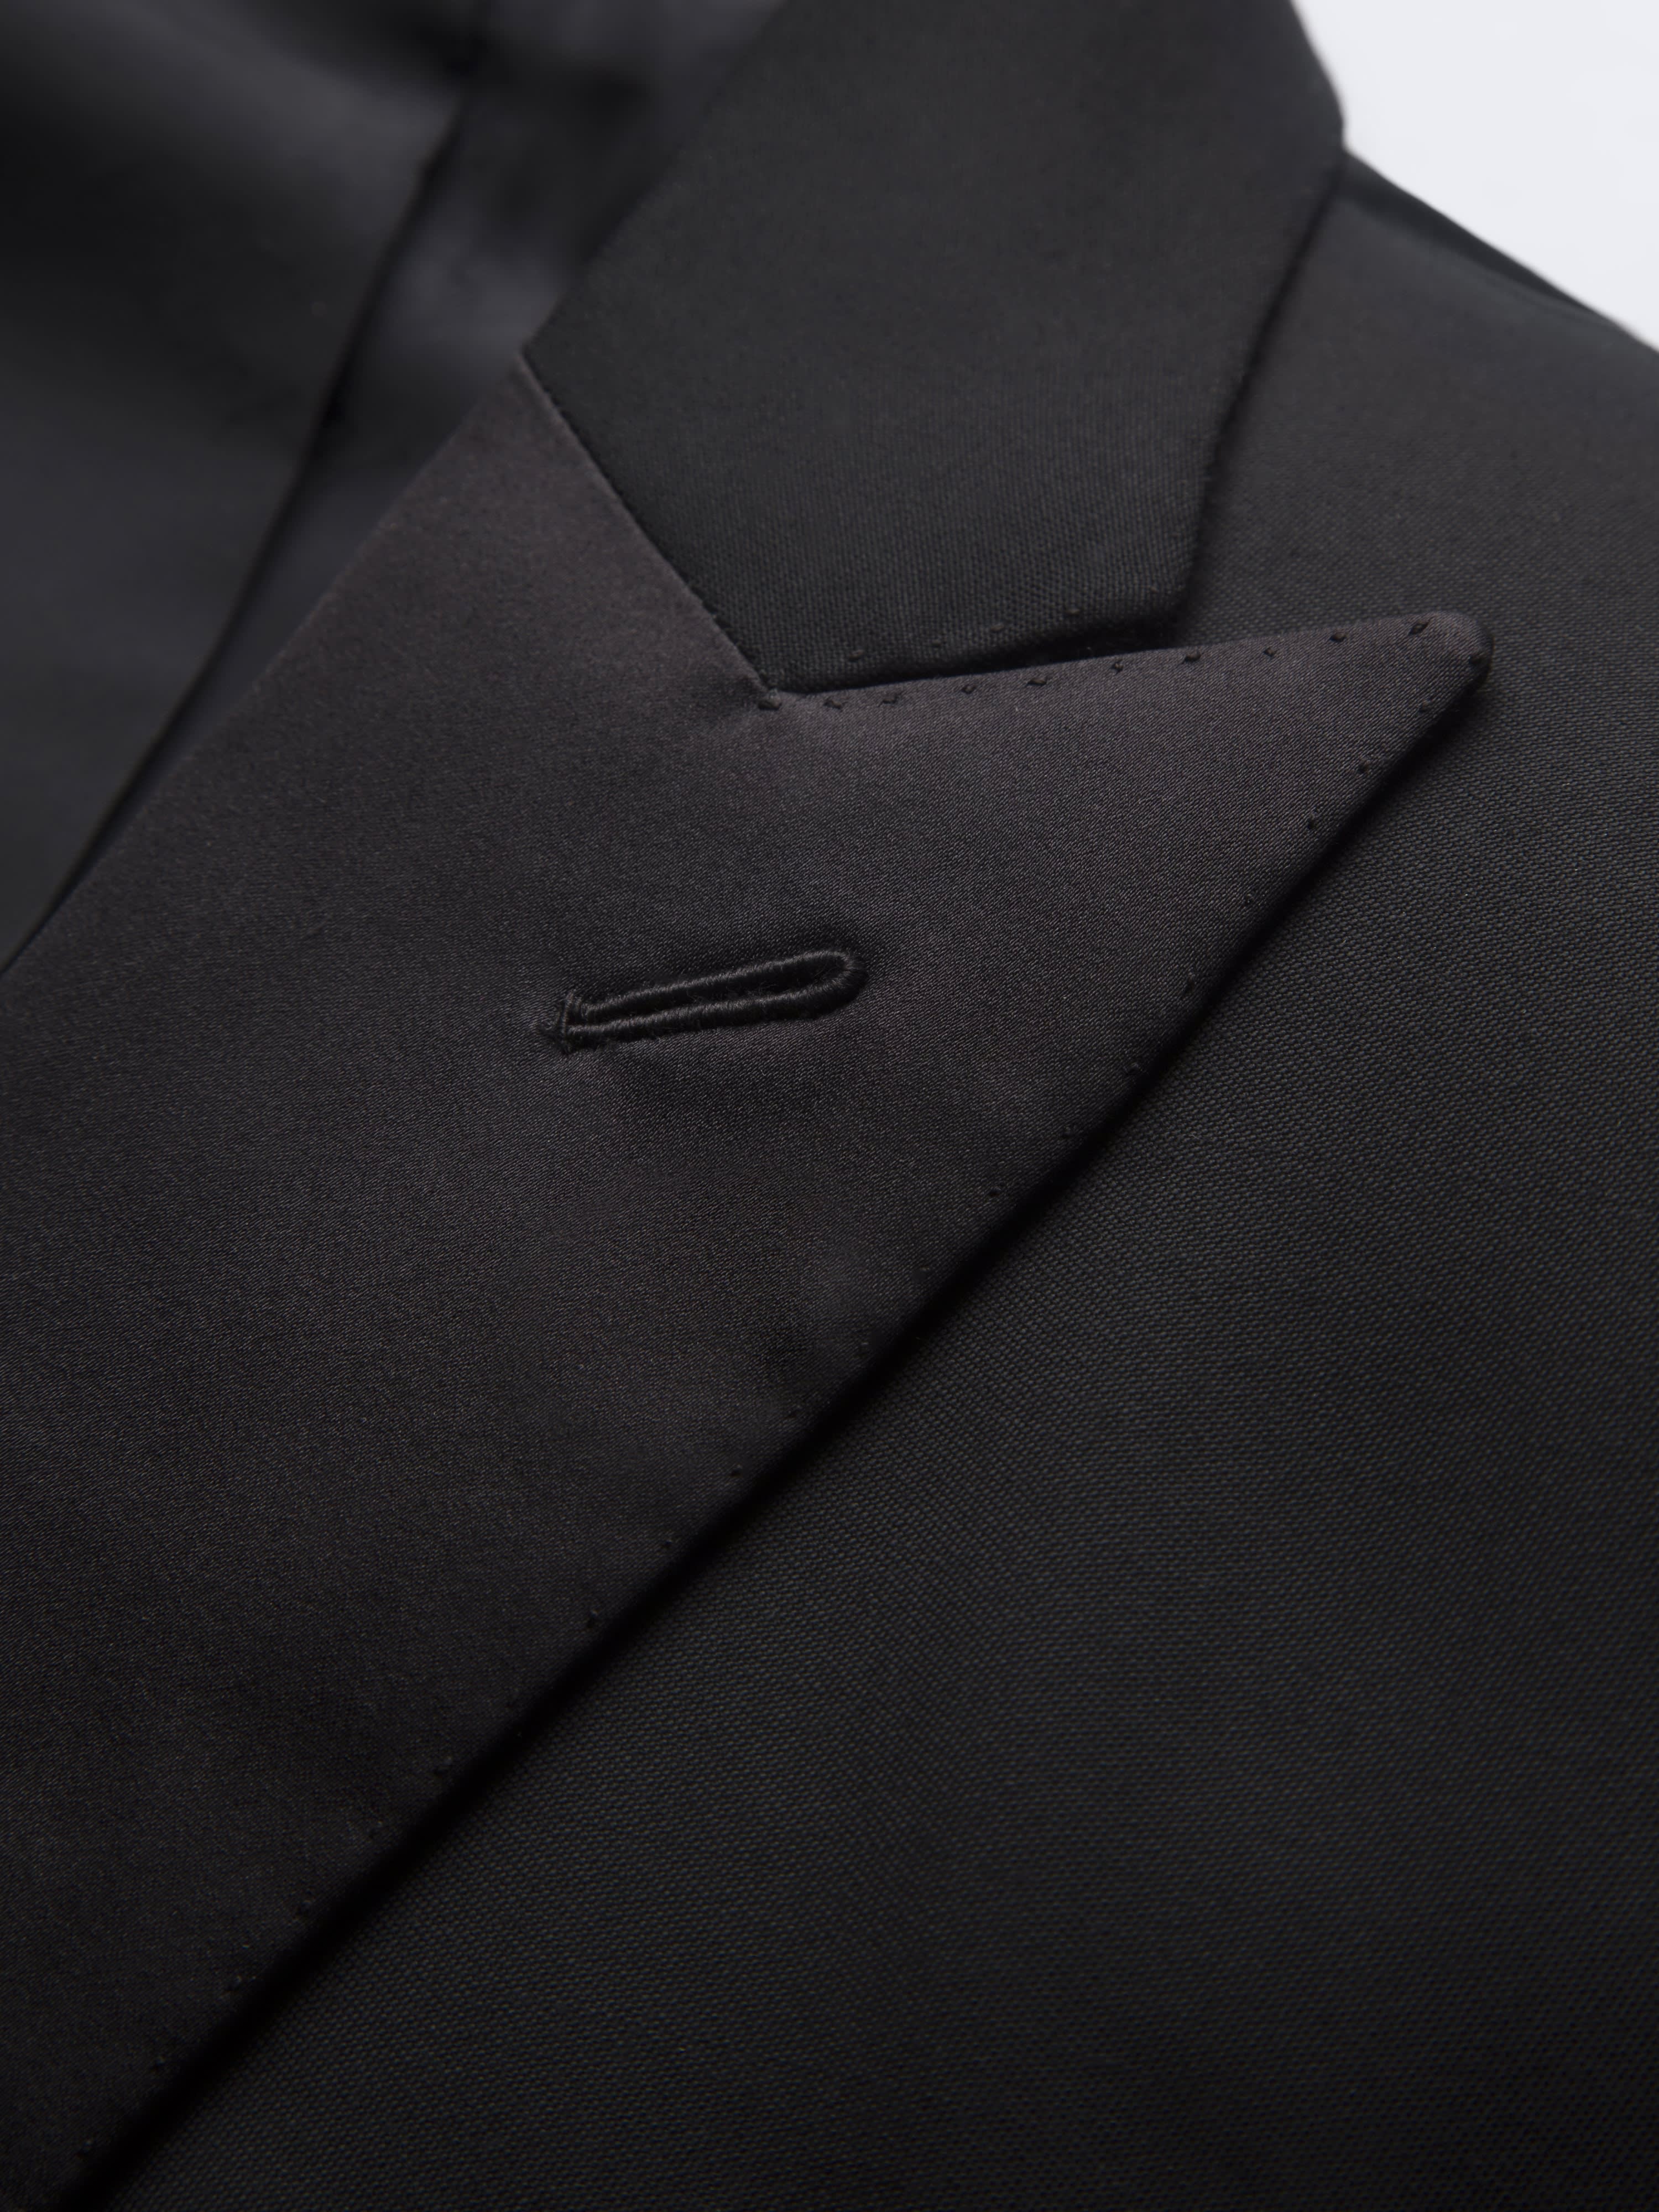 'Essential' Policleto tuxedo | Brioni® US Official Store